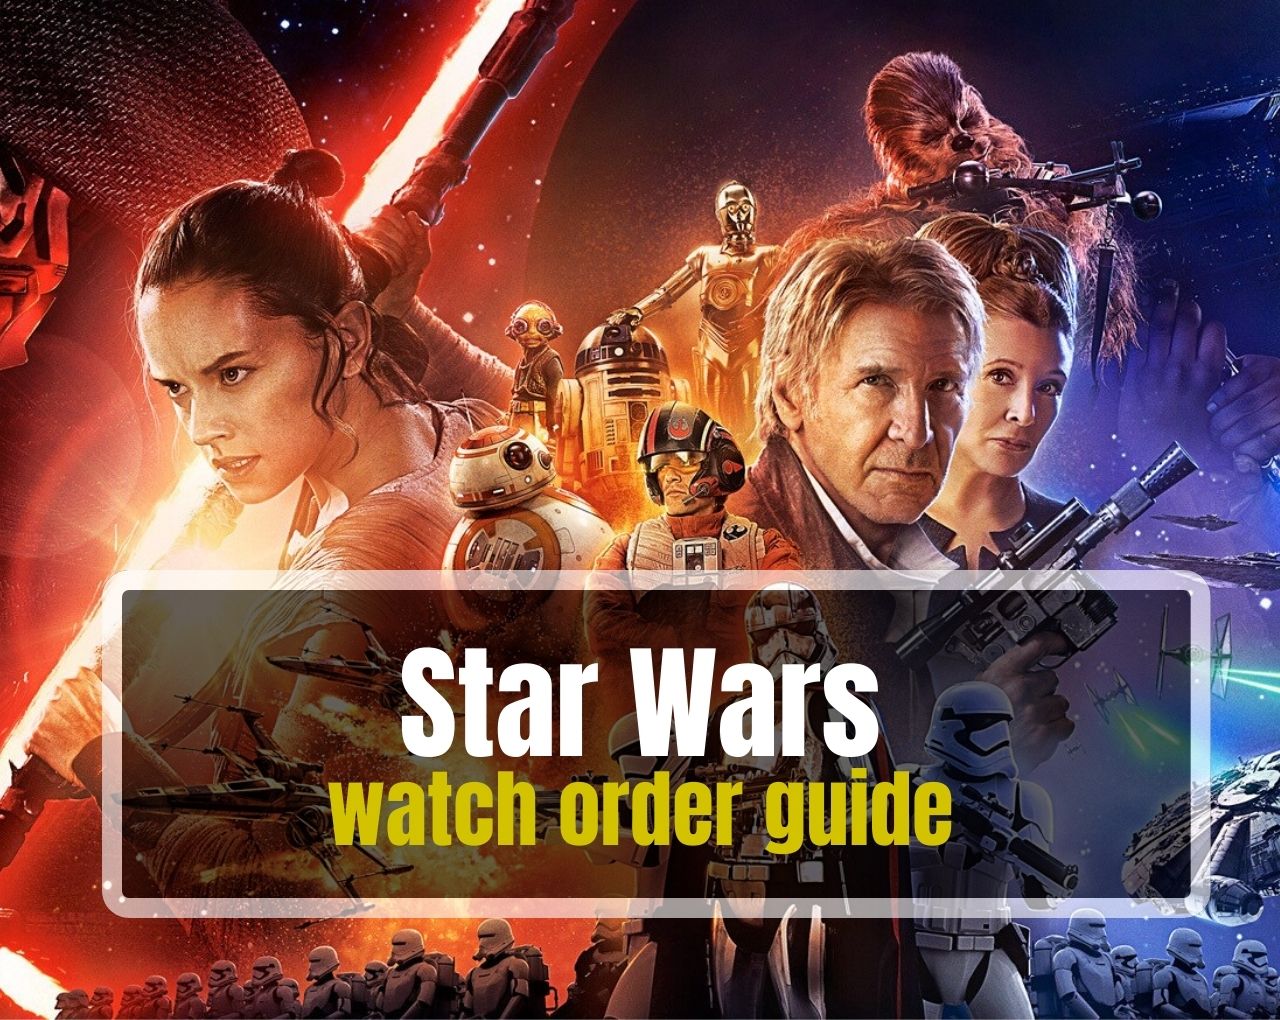 Star Wars watch order guide